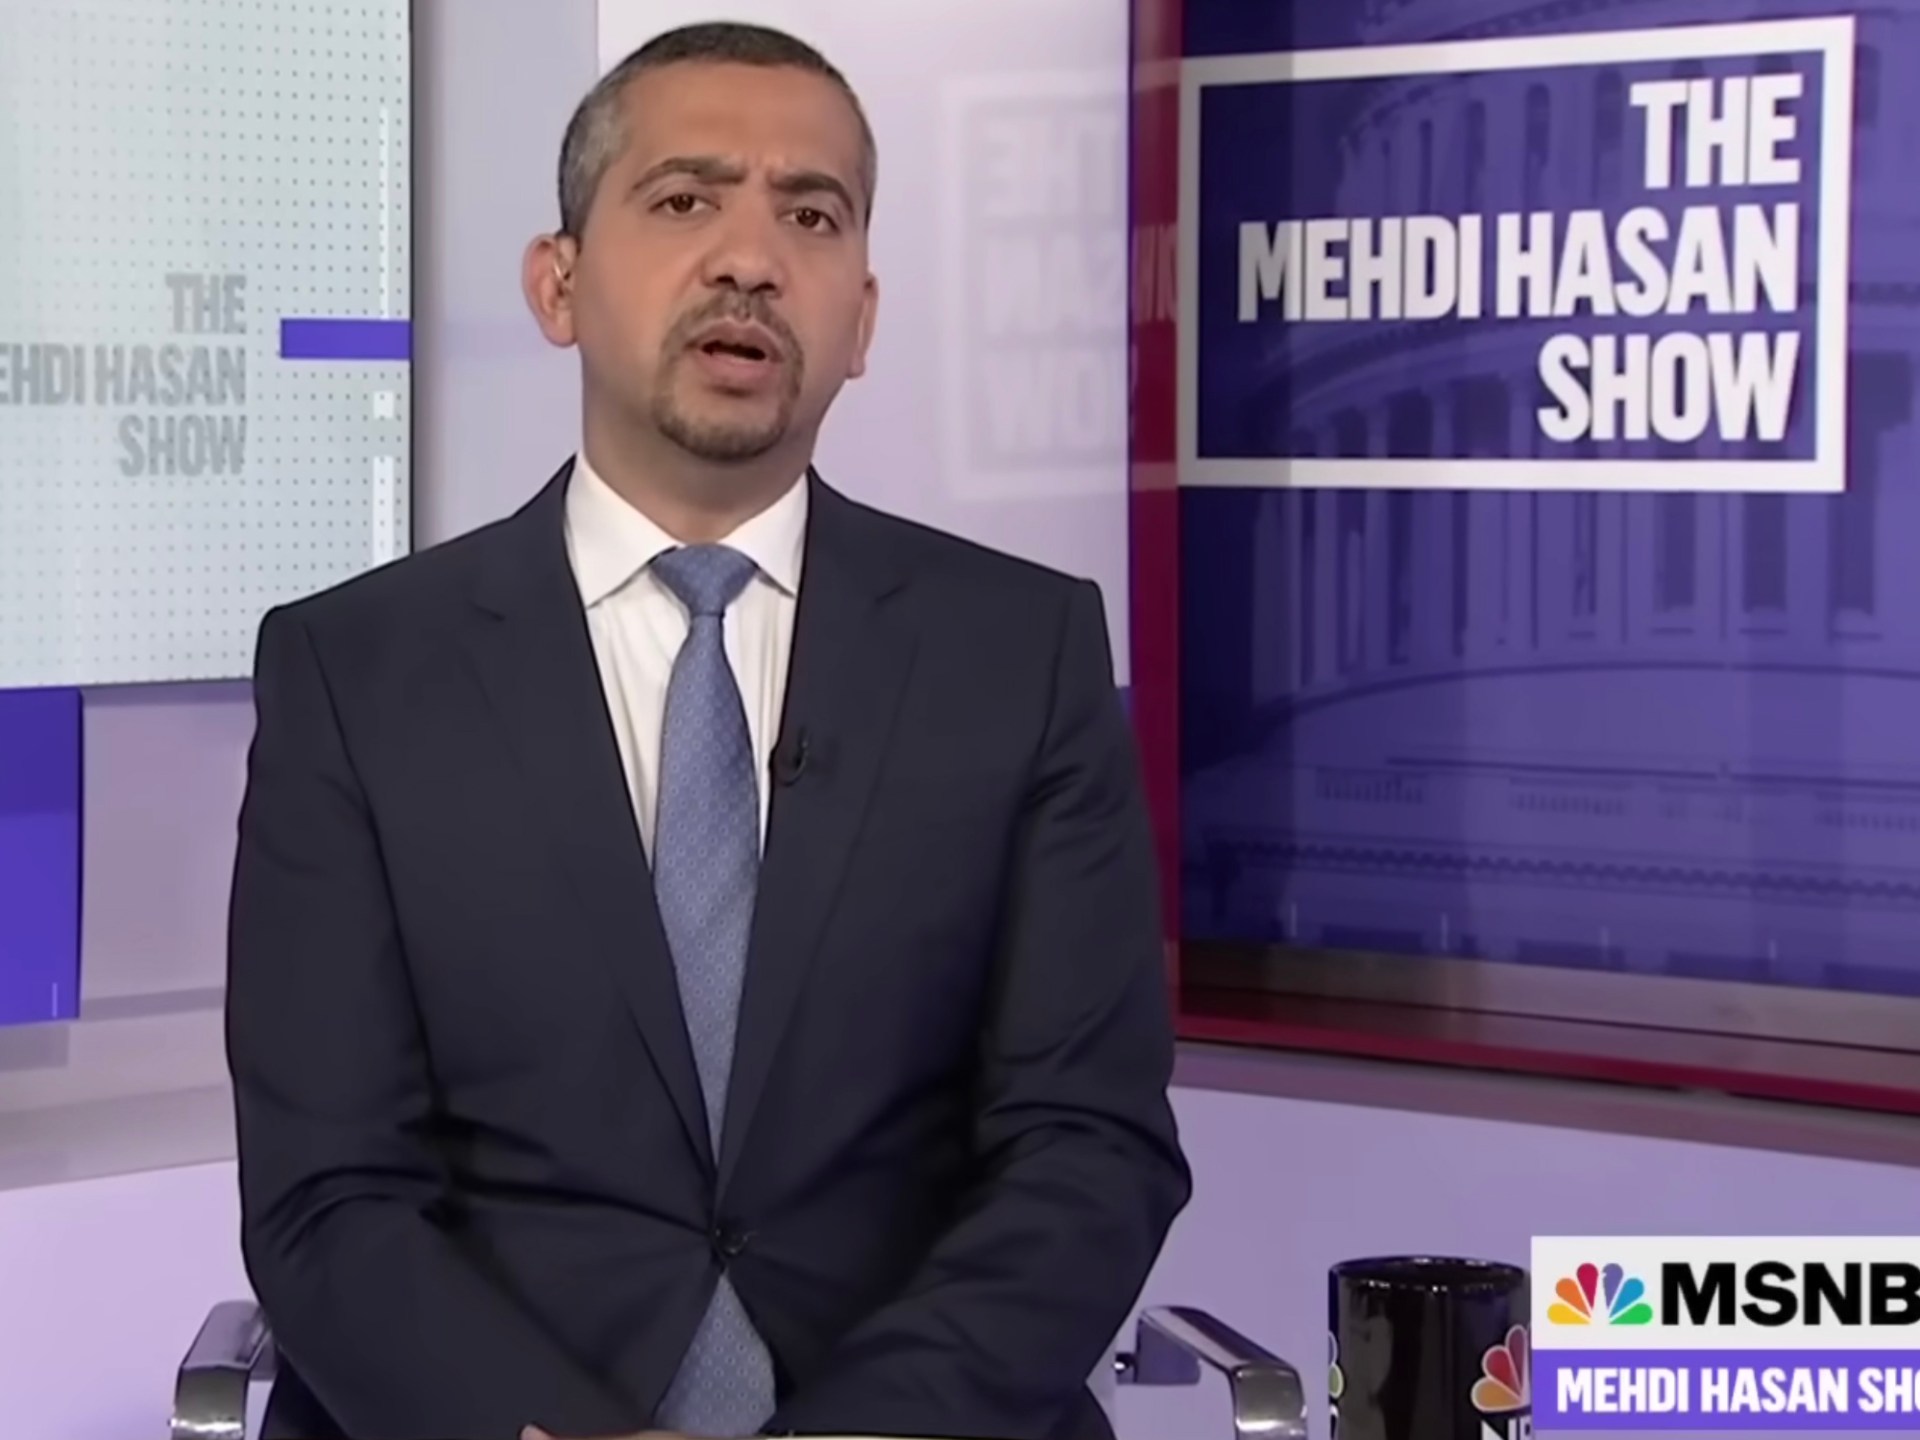 Palestine advocates decry MSNBC’s cancellation of Mehdi Hasan news show | Media News